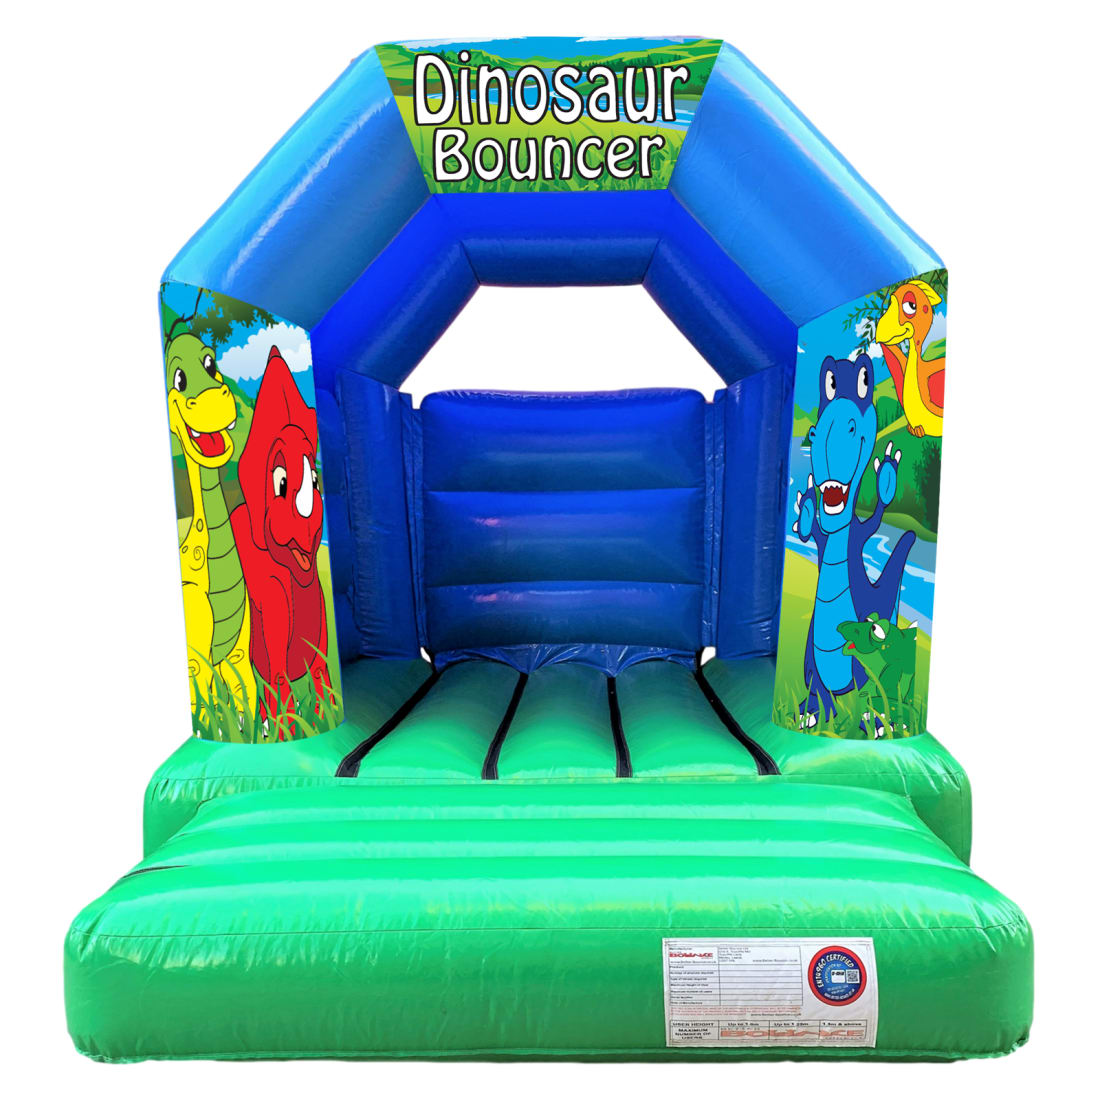 Dinosaur (Cartoon) Theme Toddler Bouncy Castle - Green & Blue - Bouncy  Castle Hire & Event Entertainments in Leeds, Wakefield, Bradford,  Huddersfield, Halifax, York, Sheffield & Nationwide